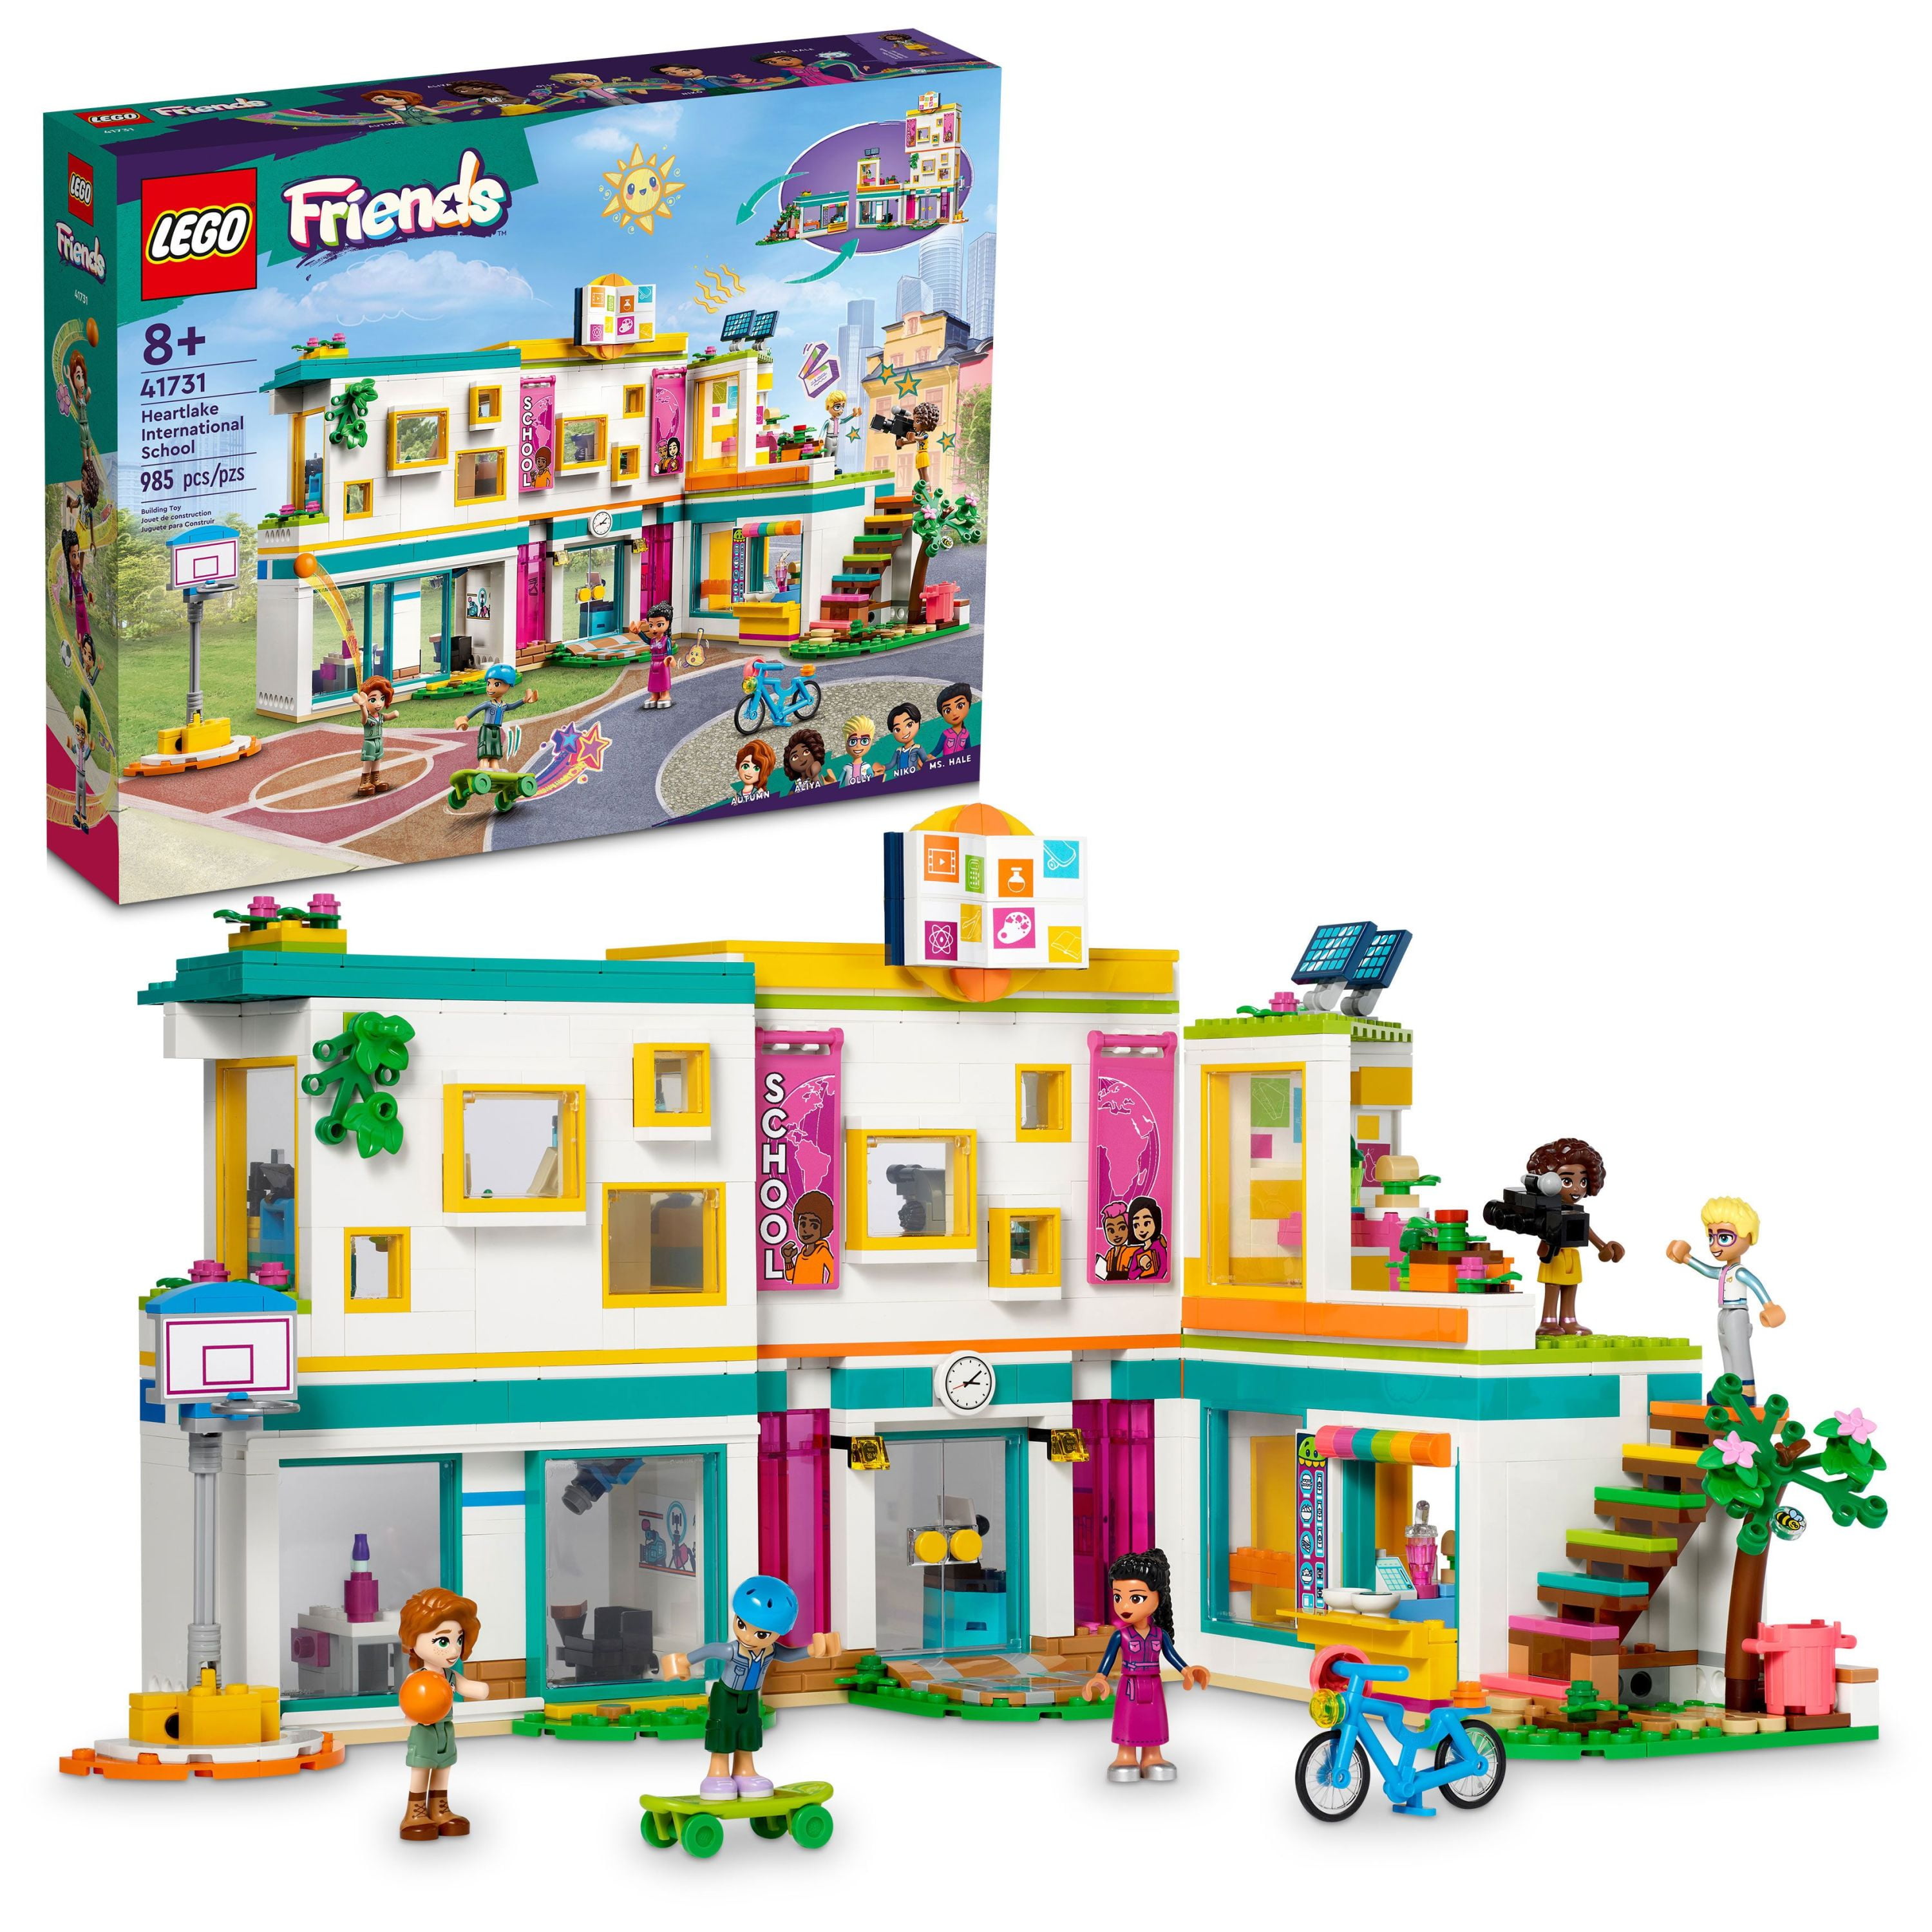 LEGO Friends Heartlake International Set 41731 - Walmart.com